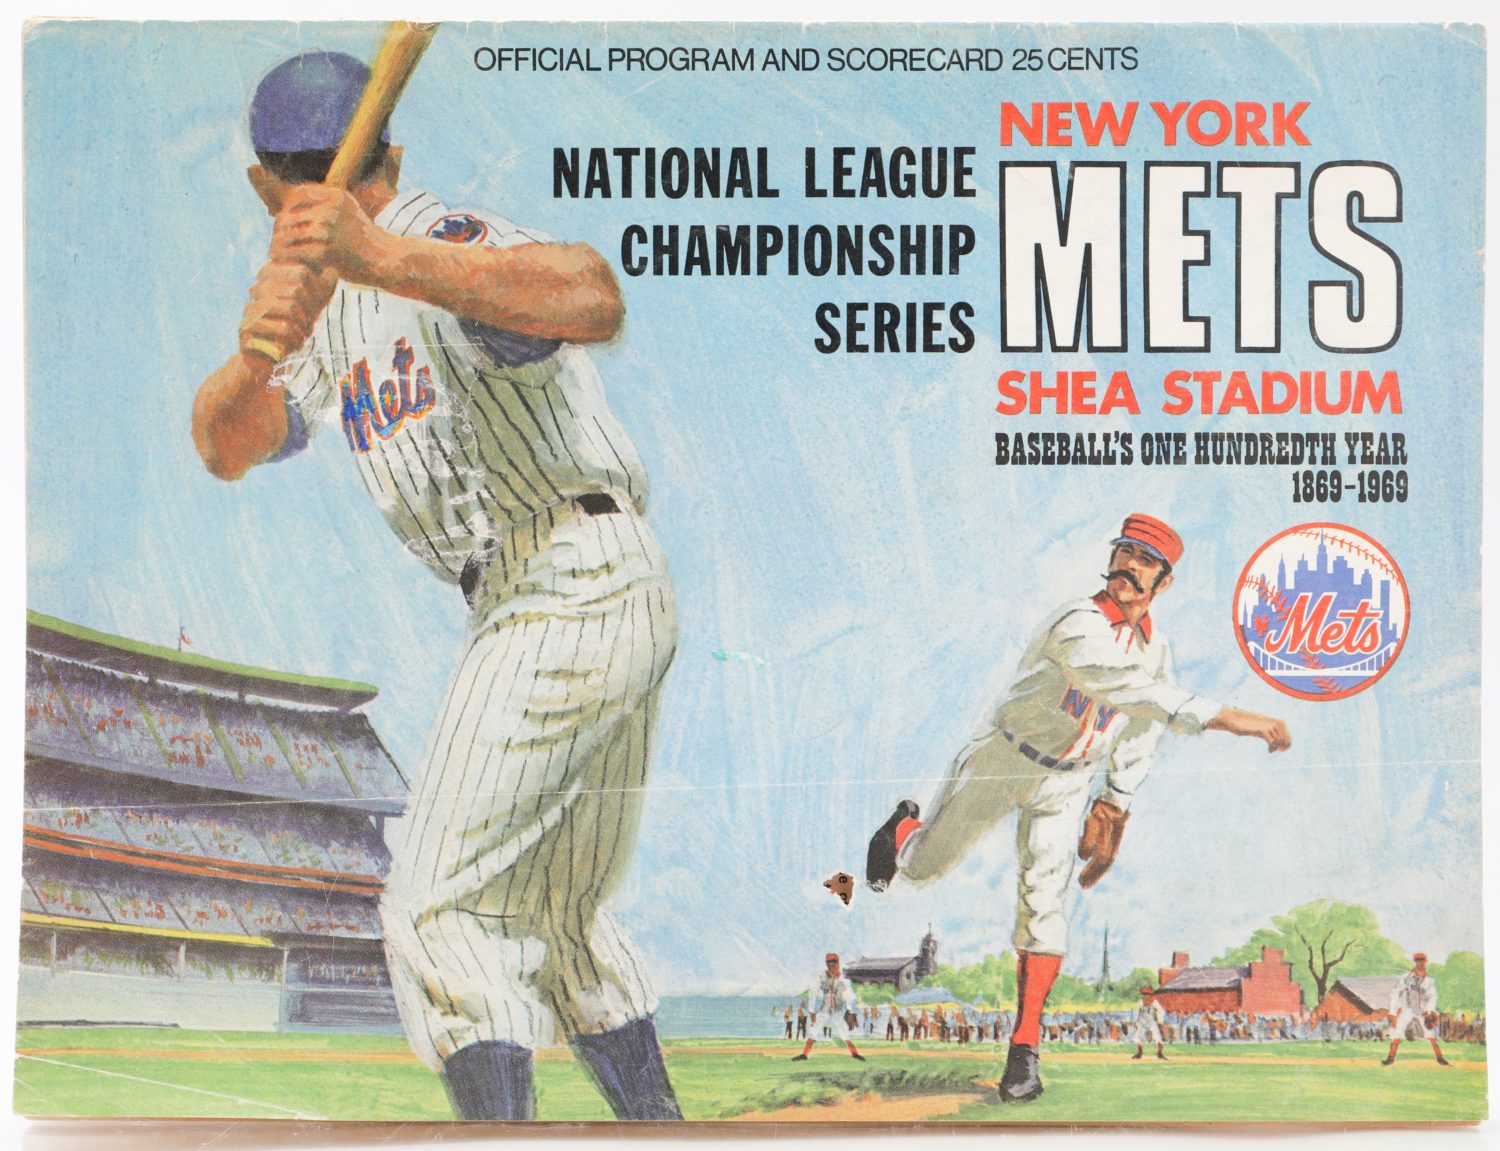 1969 New York Mets NLCS Official Program